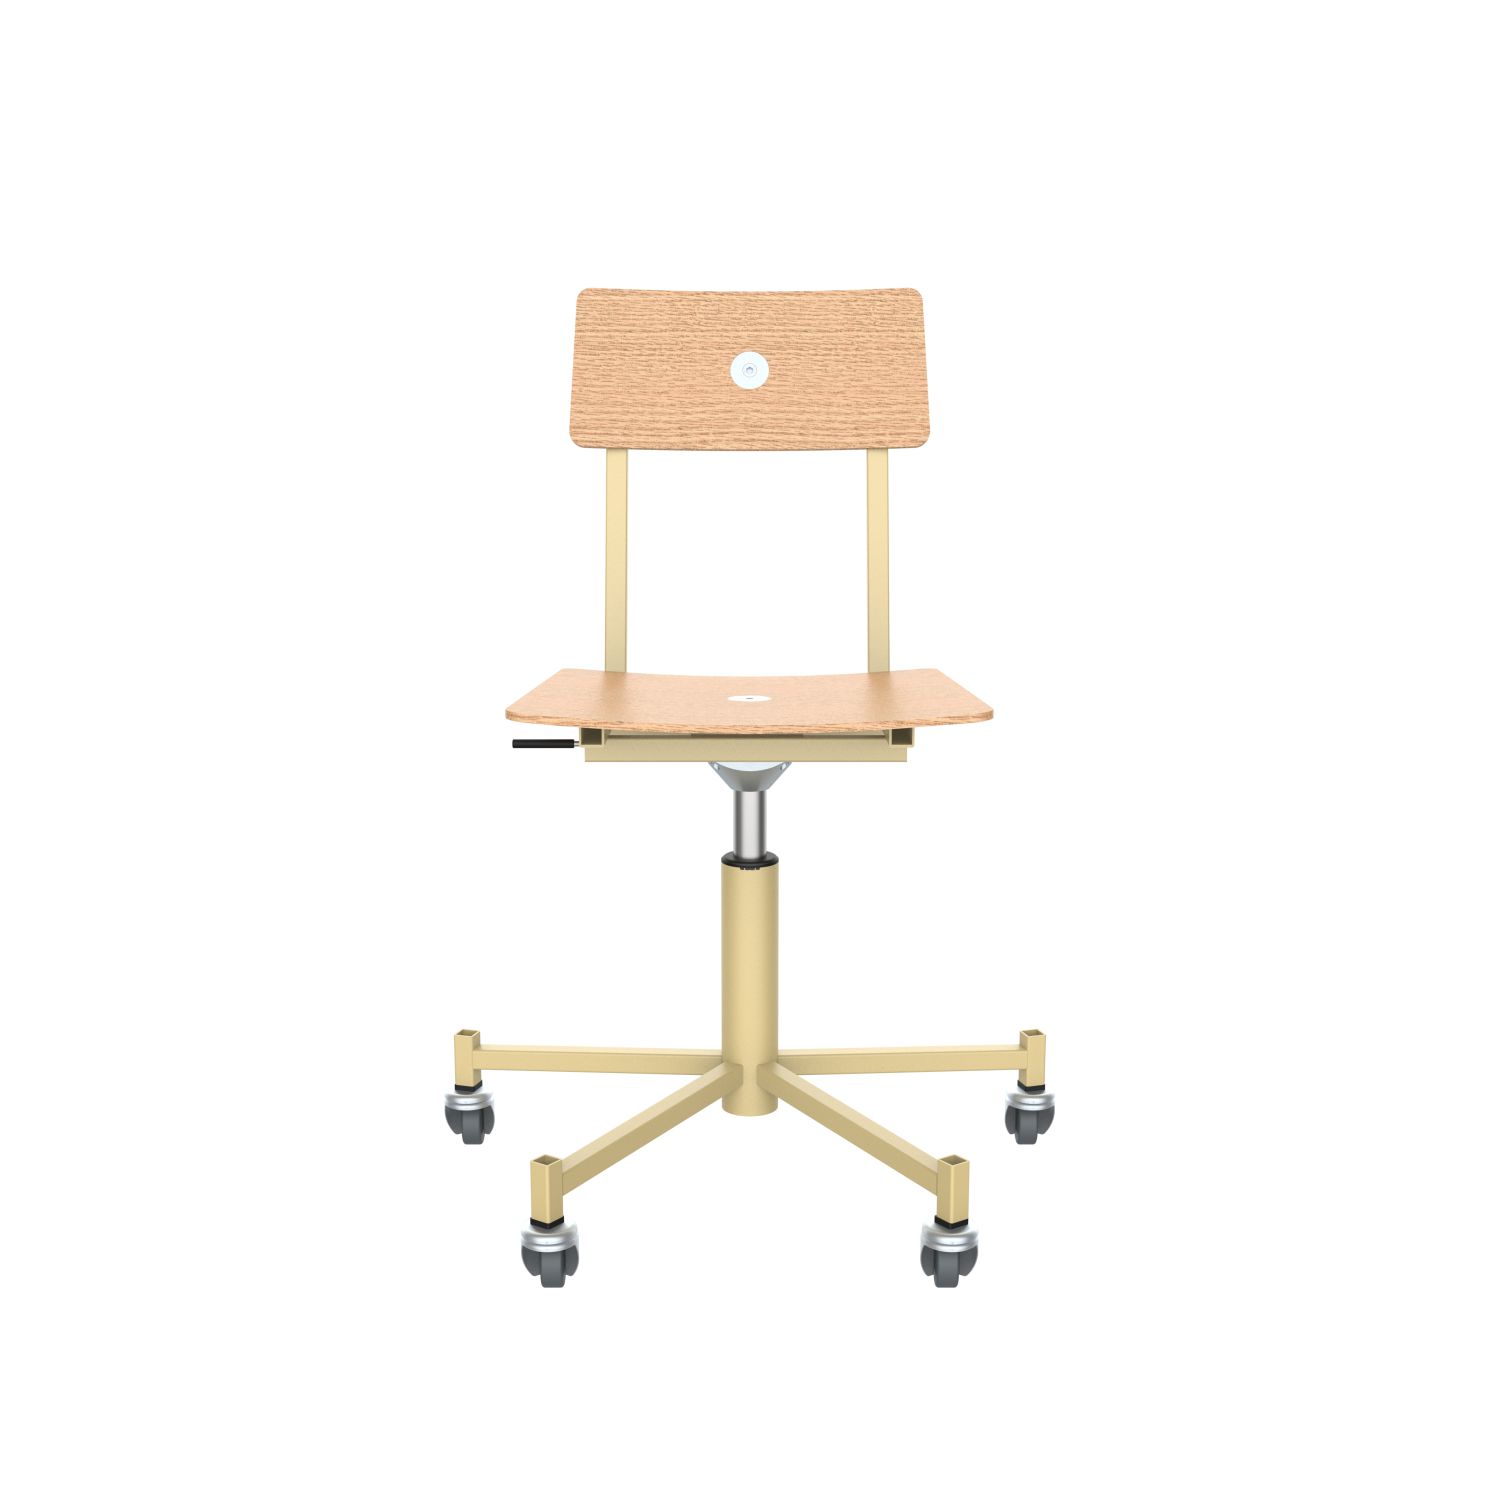 lensvelt piet hein eek mitw wooden office chair without armrests natural oak green beige ral1000 with wheels